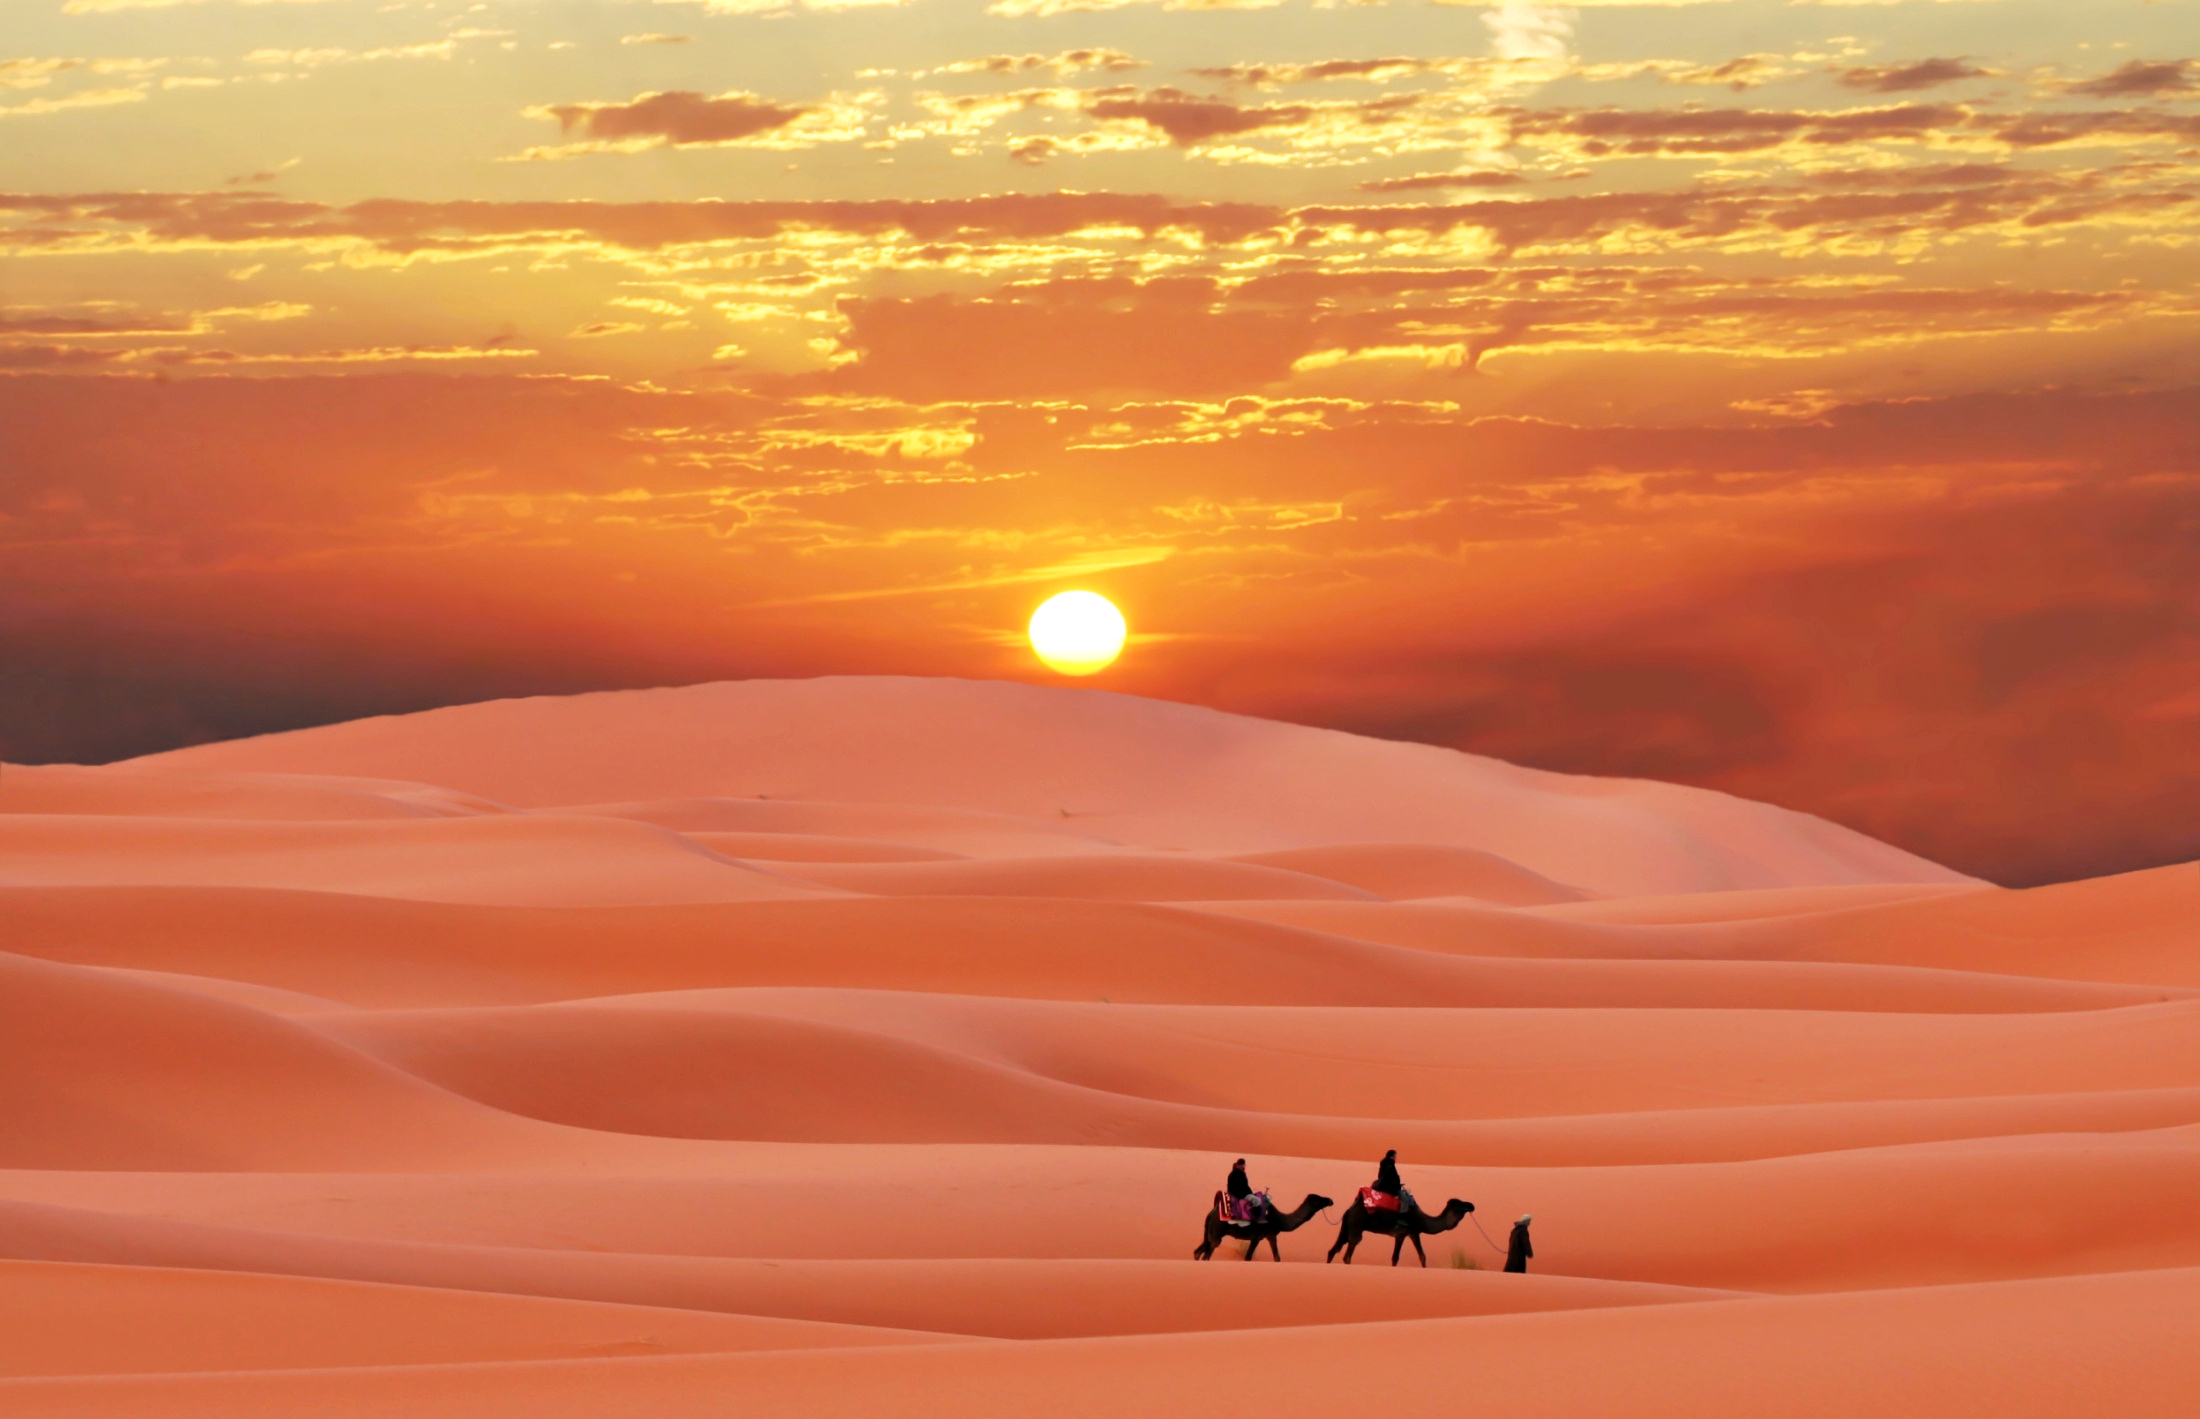 Image: Desert, sand, dune, dunes, sunset, sky, camels, riders